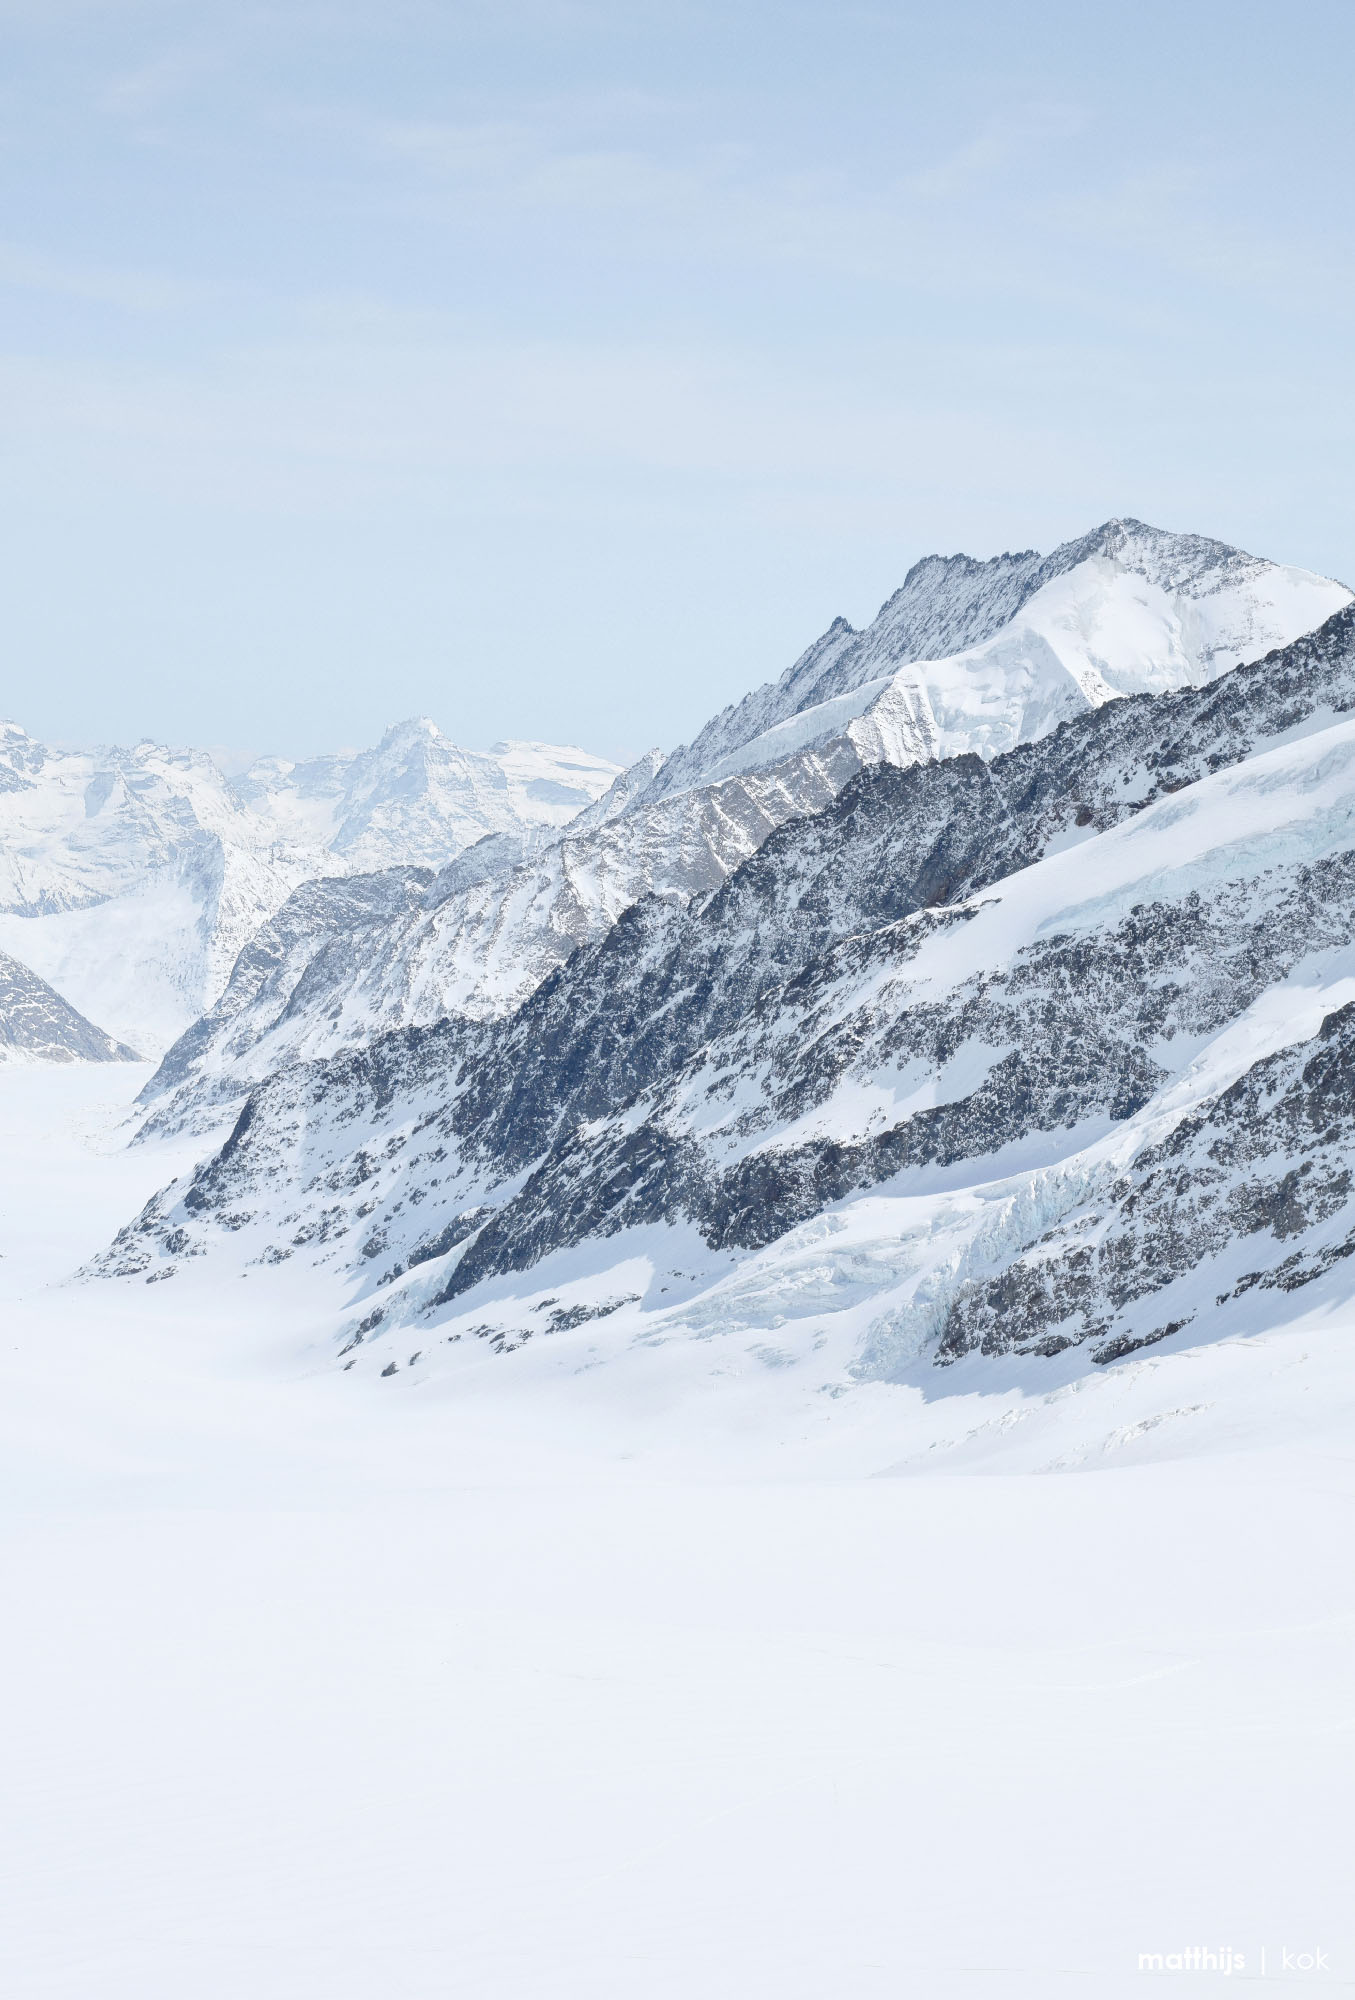 Swiss Alps, Jungfraujoch, Switzerland | Photo by Matthijs Kok